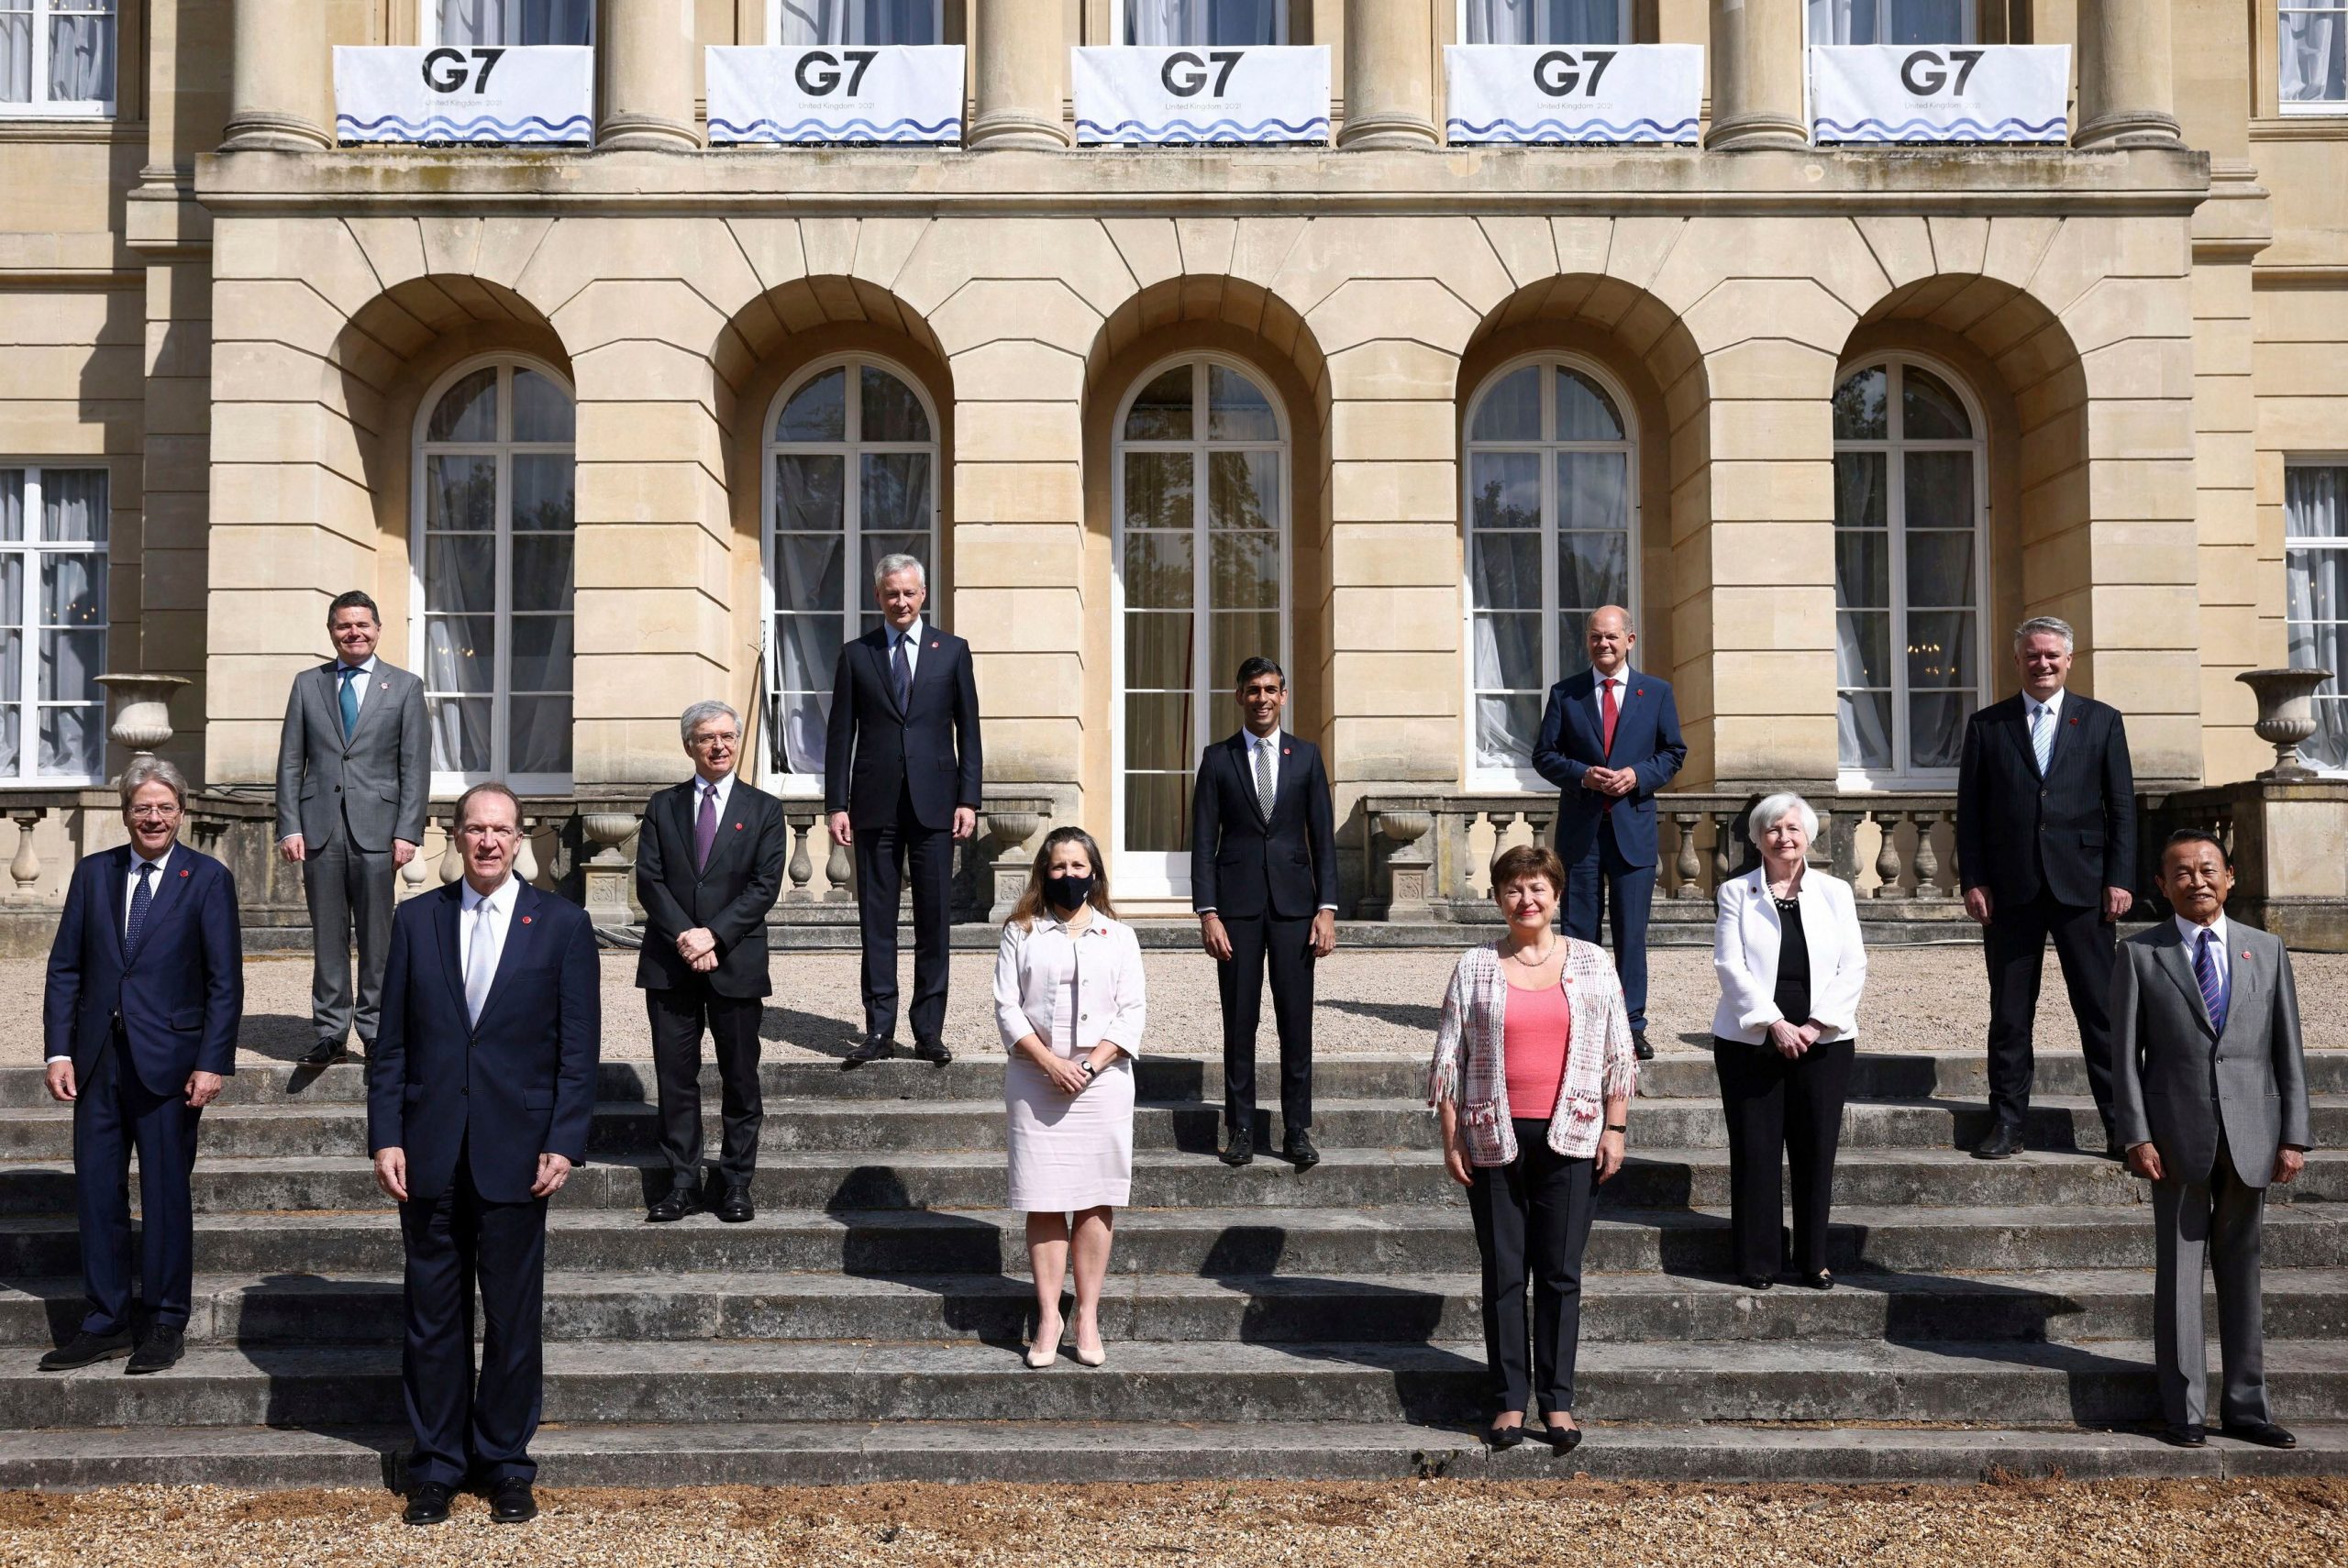 G7 steps towards making climate risk disclosure mandatory